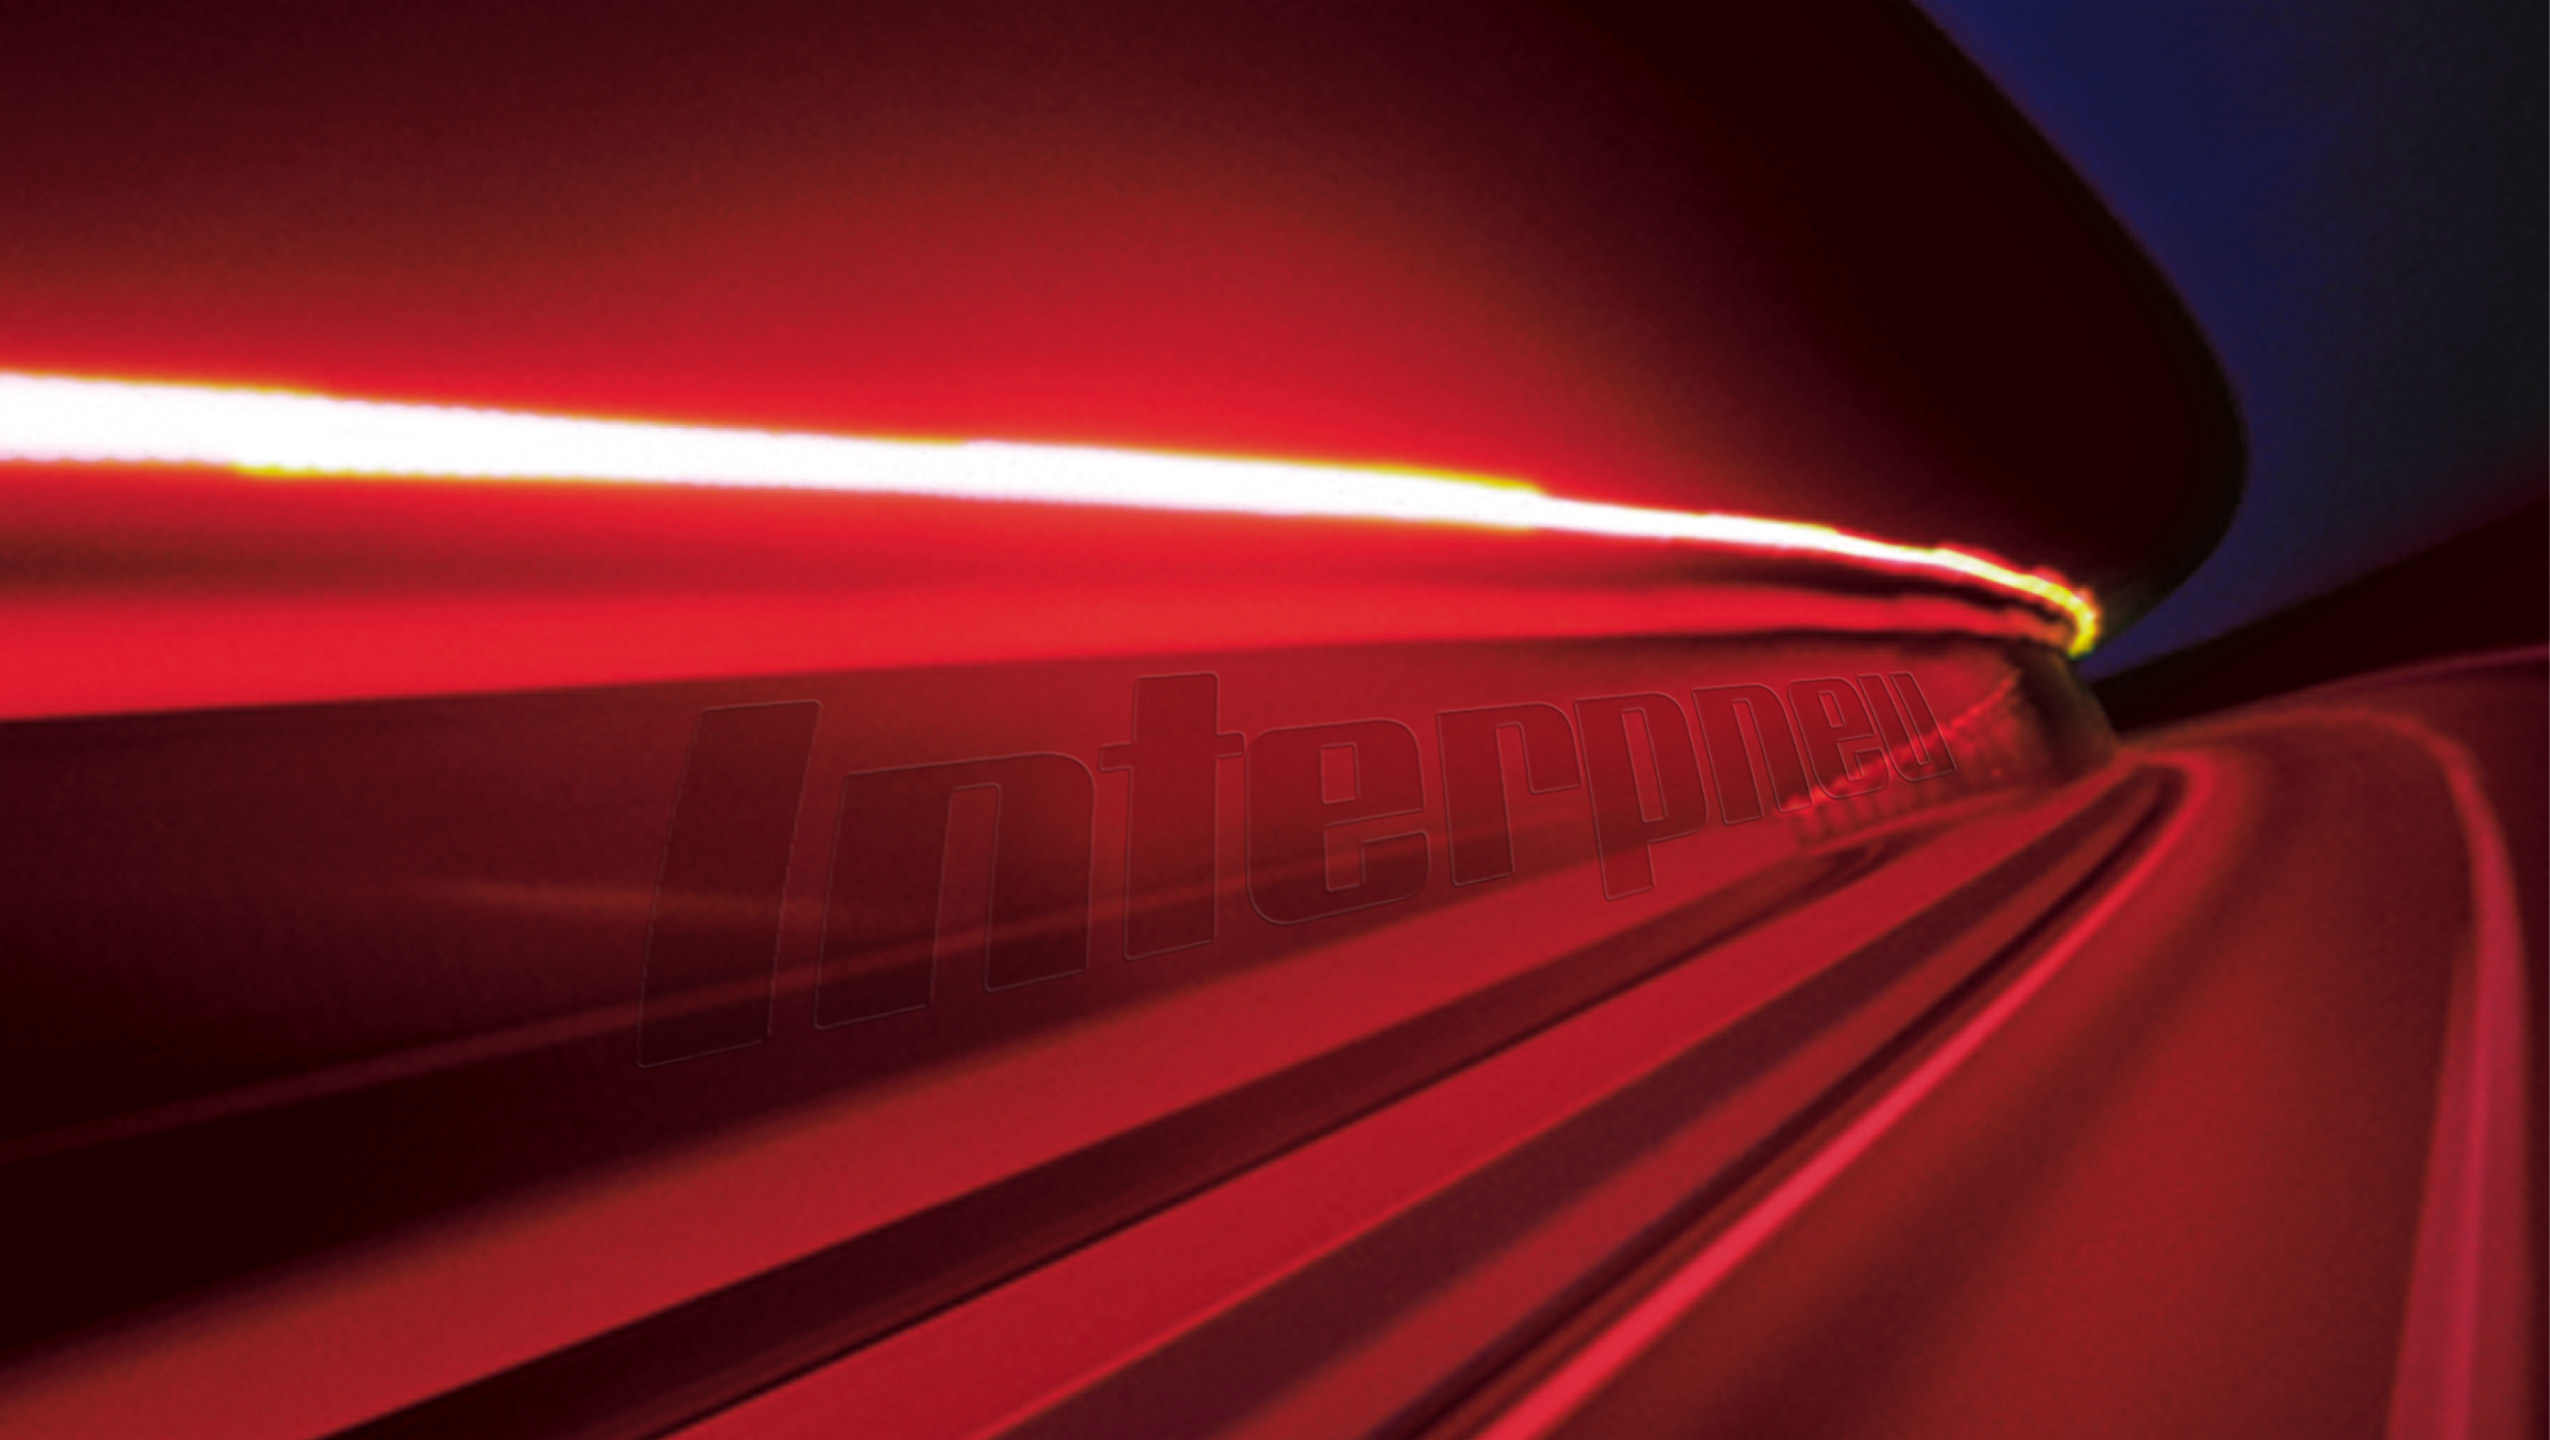 2550 x 1440 wallpaper,red,light,automotive lighting,lighting,line